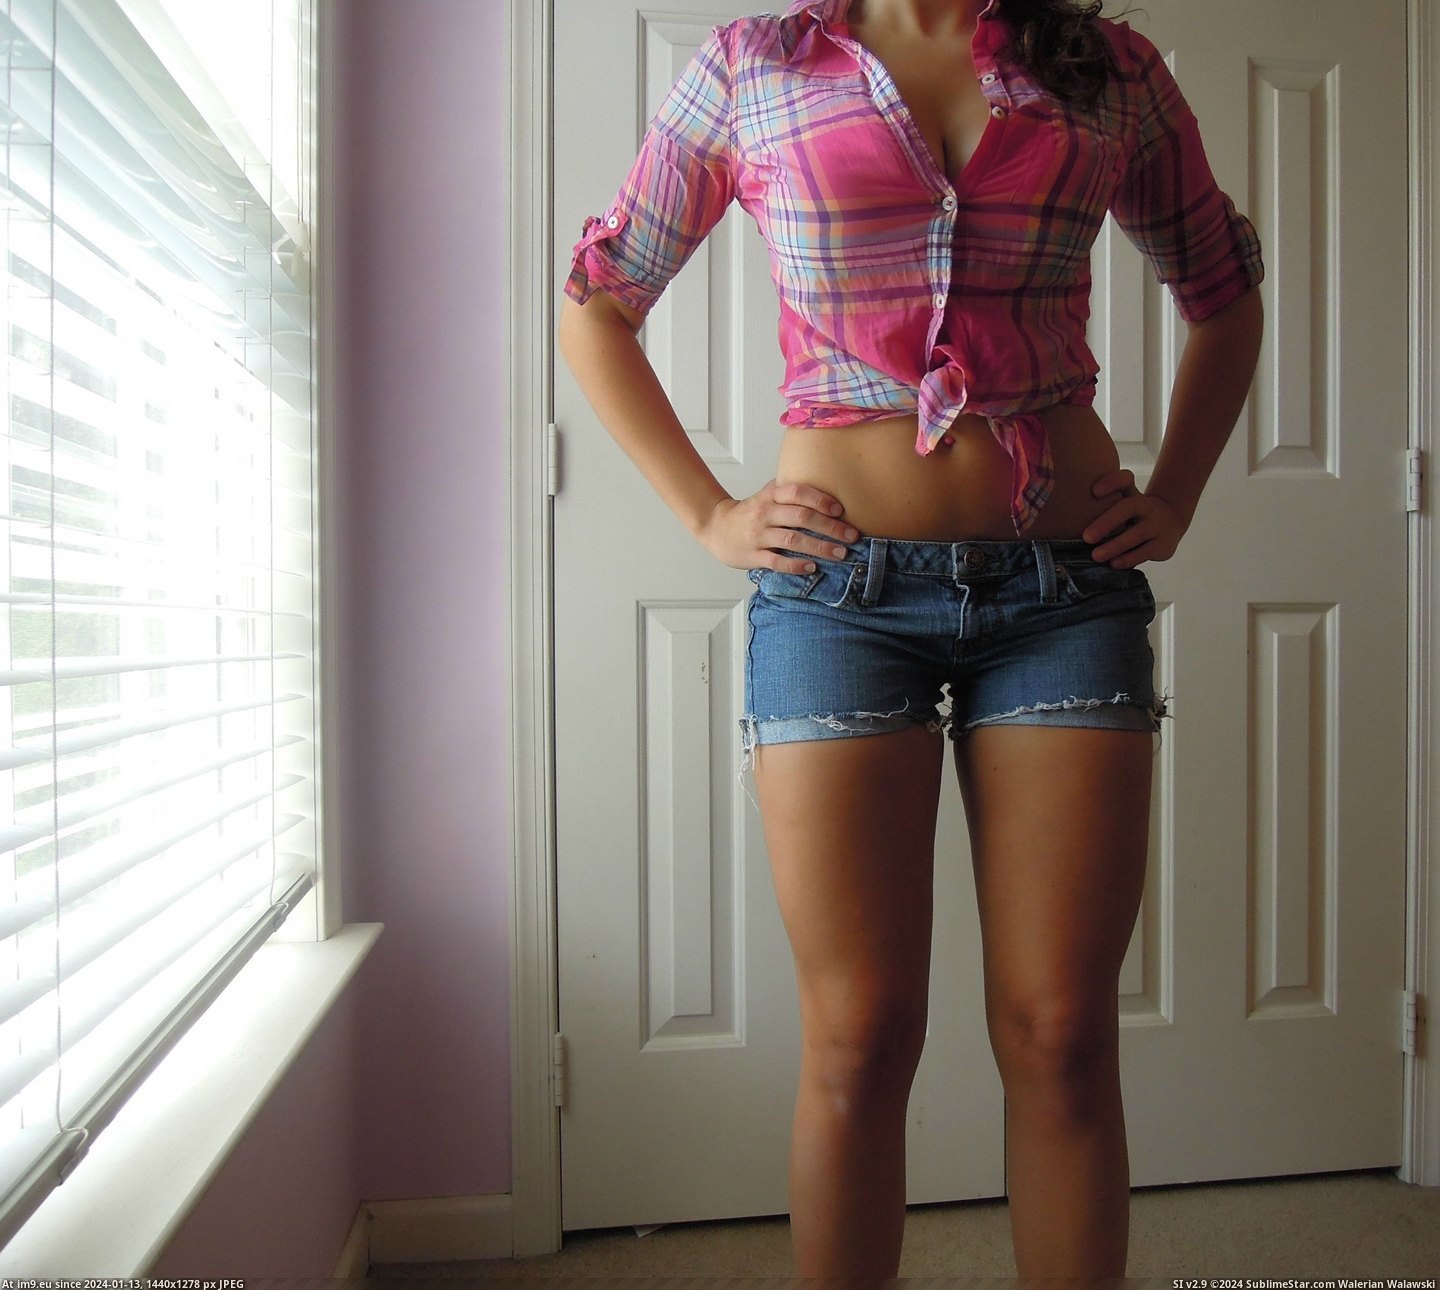 #Ass #Booty #Titties #Jean #Plaid #Shirt #Shorts [Nsfw] Jean booty shorts, a plaid shirt, ass, and titties 14 Pic. (Изображение из альбом My r/NSFW favs))